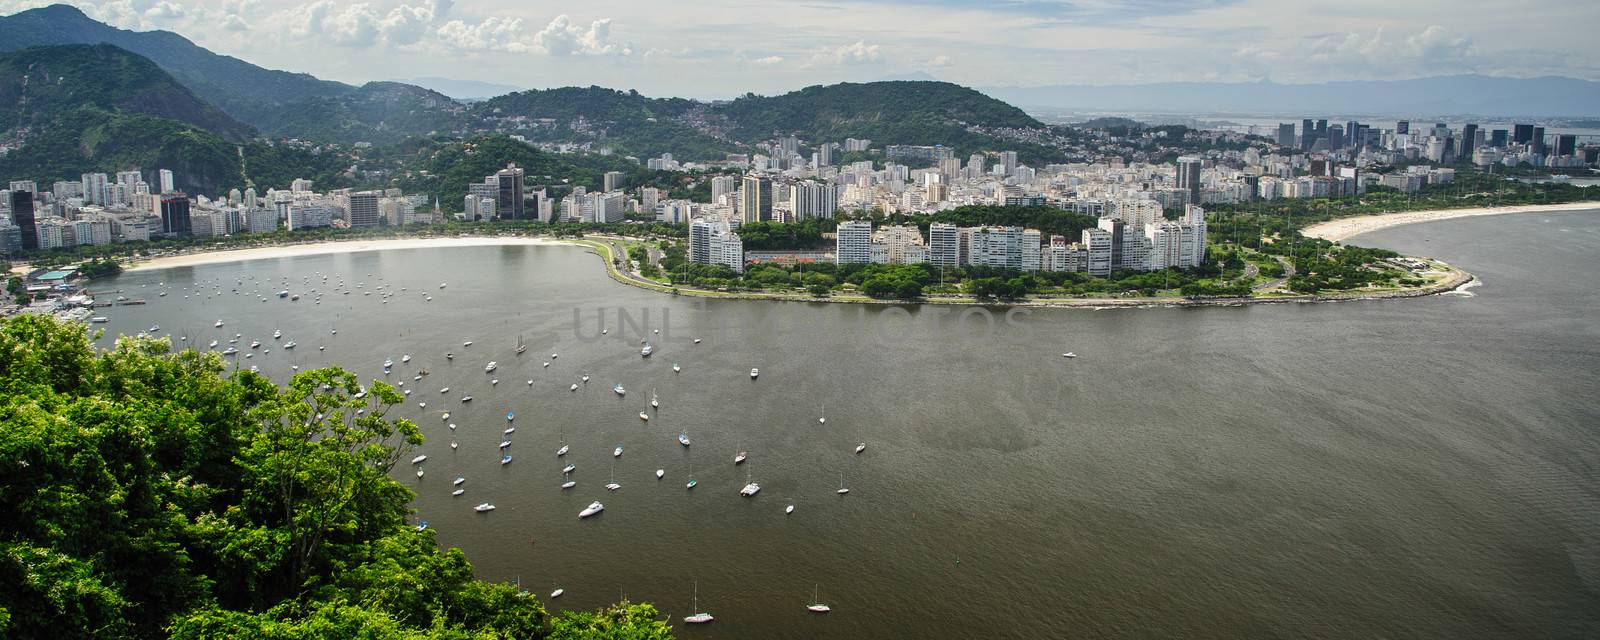 High angle view of Rio de Janeiro city coastline with boats in Guanbara bay, Brazil.